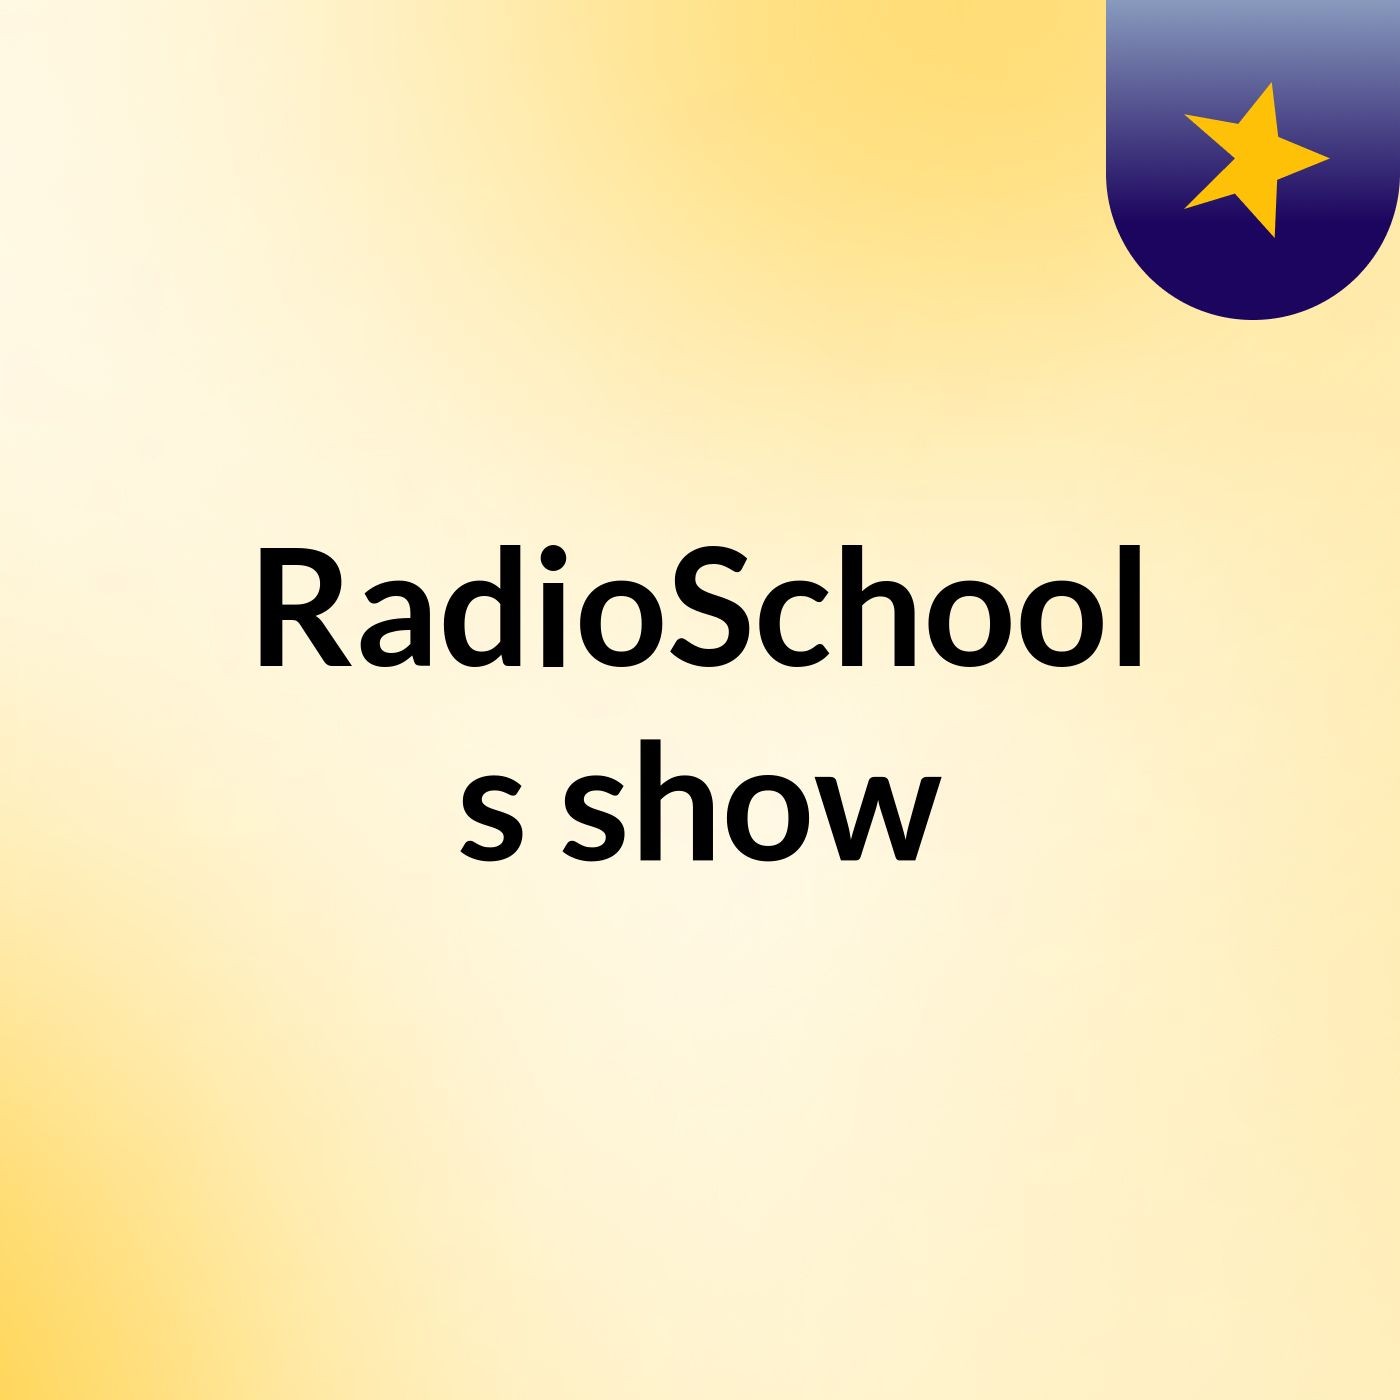 RadioSchool's show